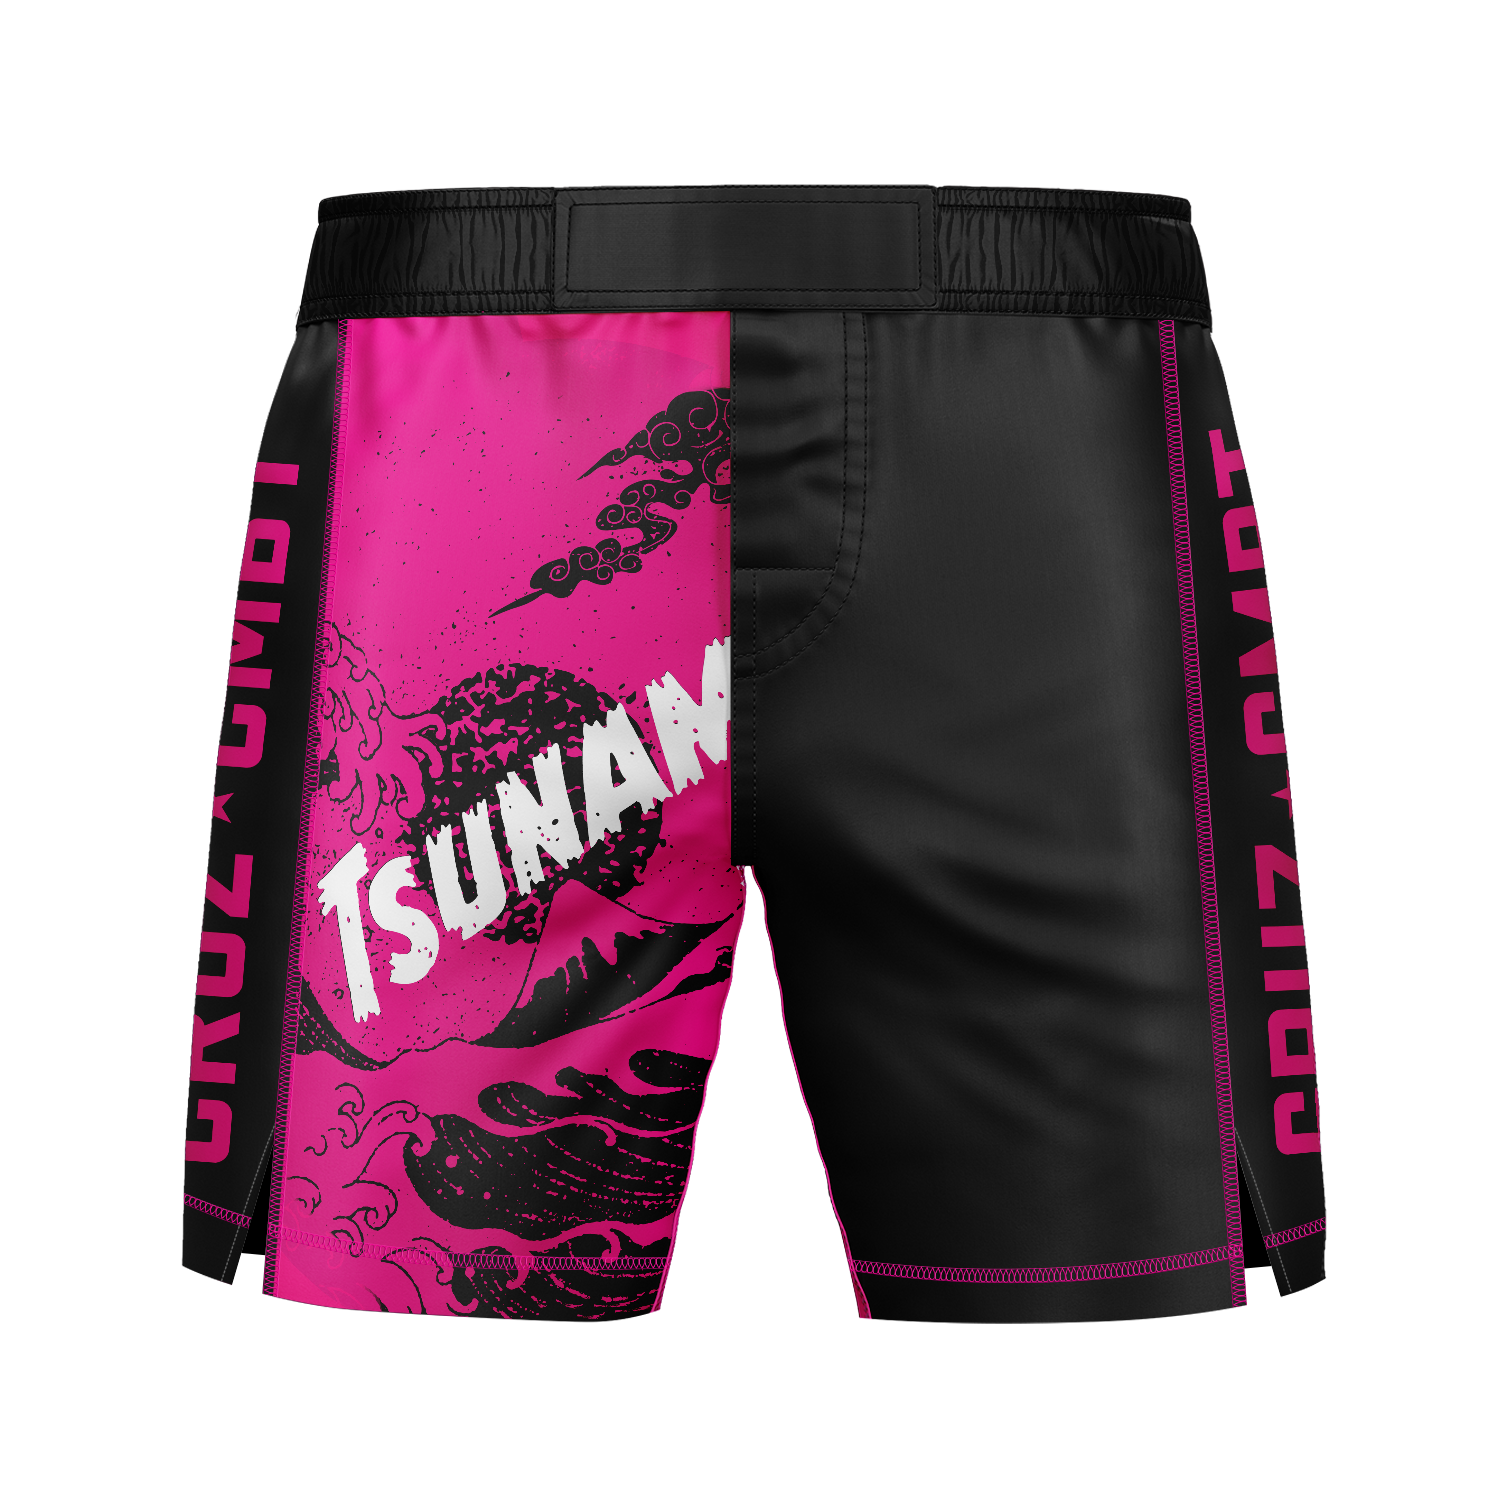 Tsunami JJ men's 7" fight shorts Pink Wave, black